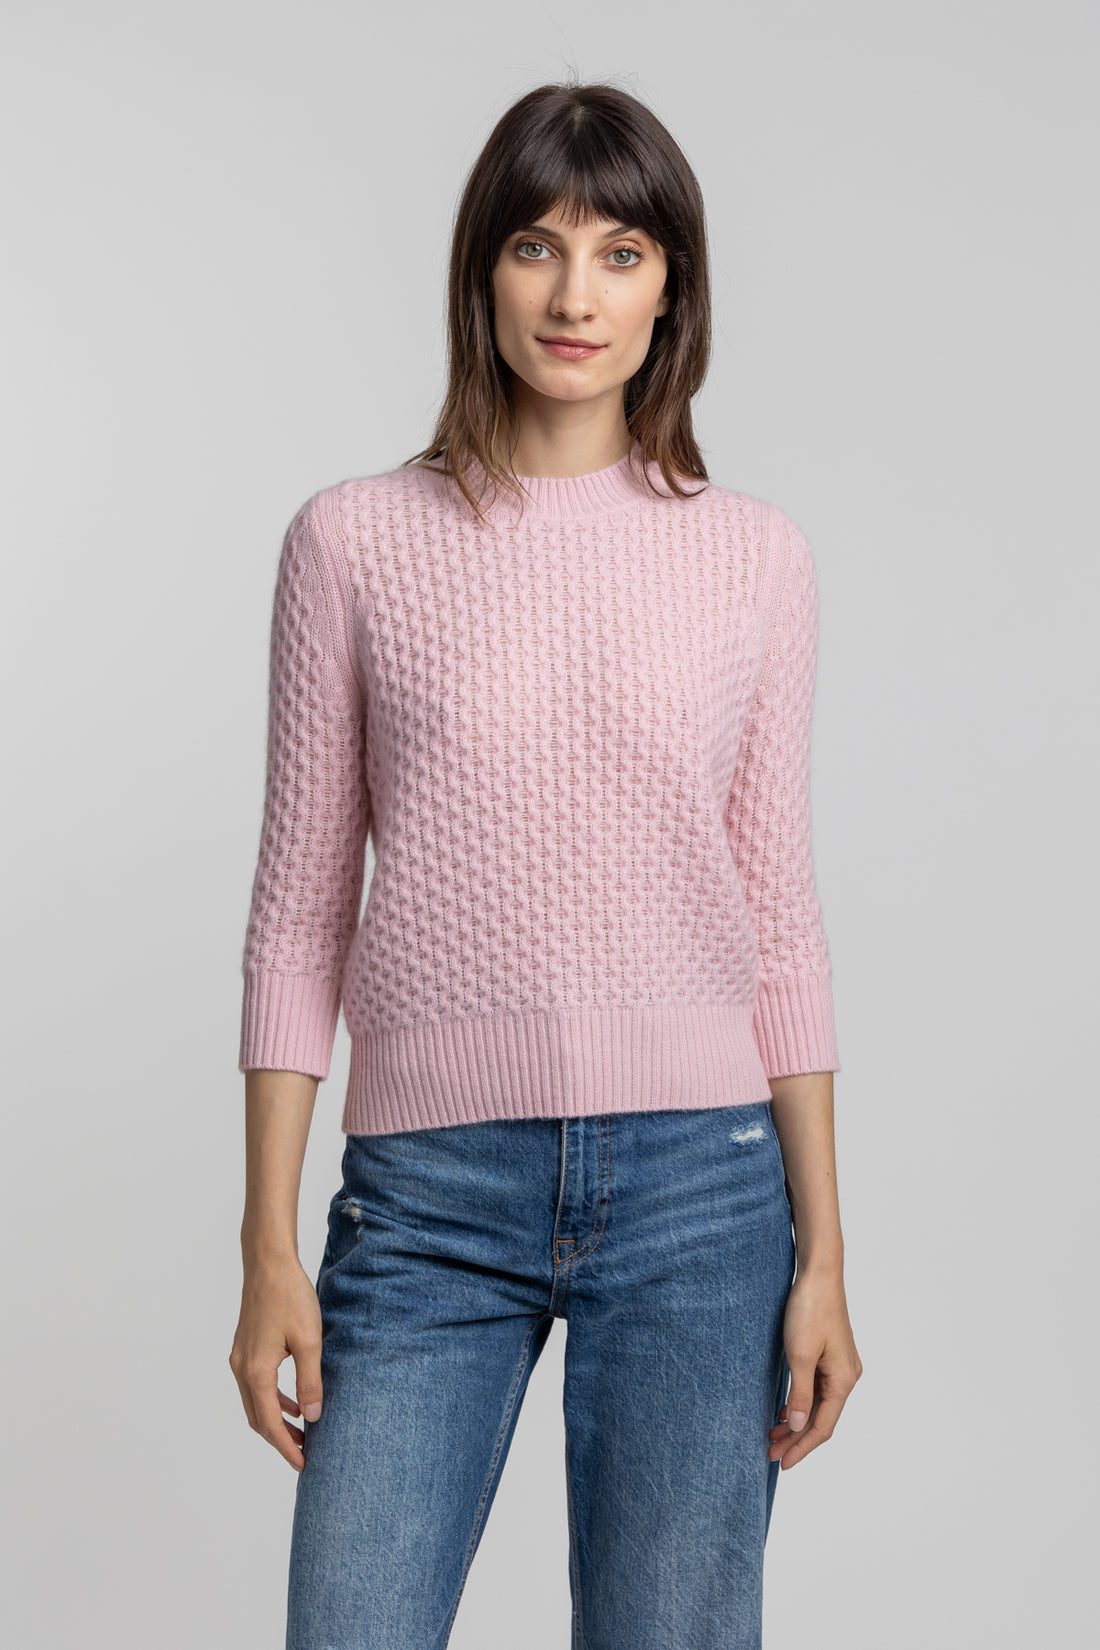 HoneyComb Cashmere Sweater